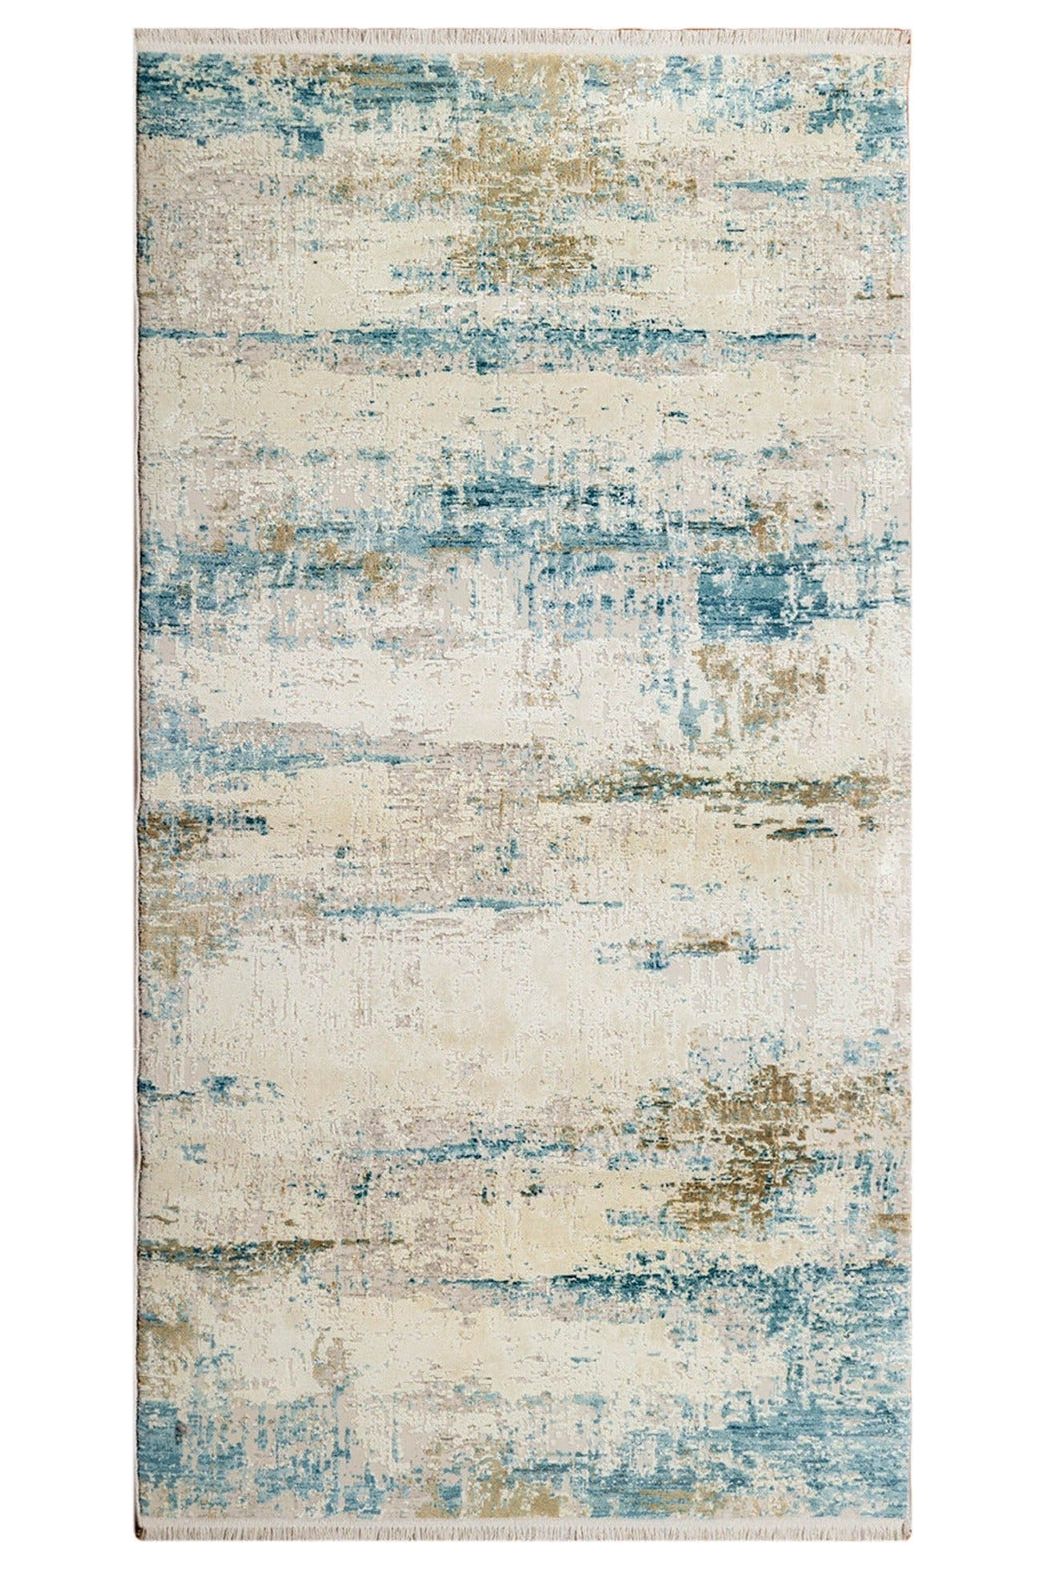 #Turkish_Carpets_Rugs# #Modern_Carpets# #Abrash_Carpets#Abrash-18005337-150x80